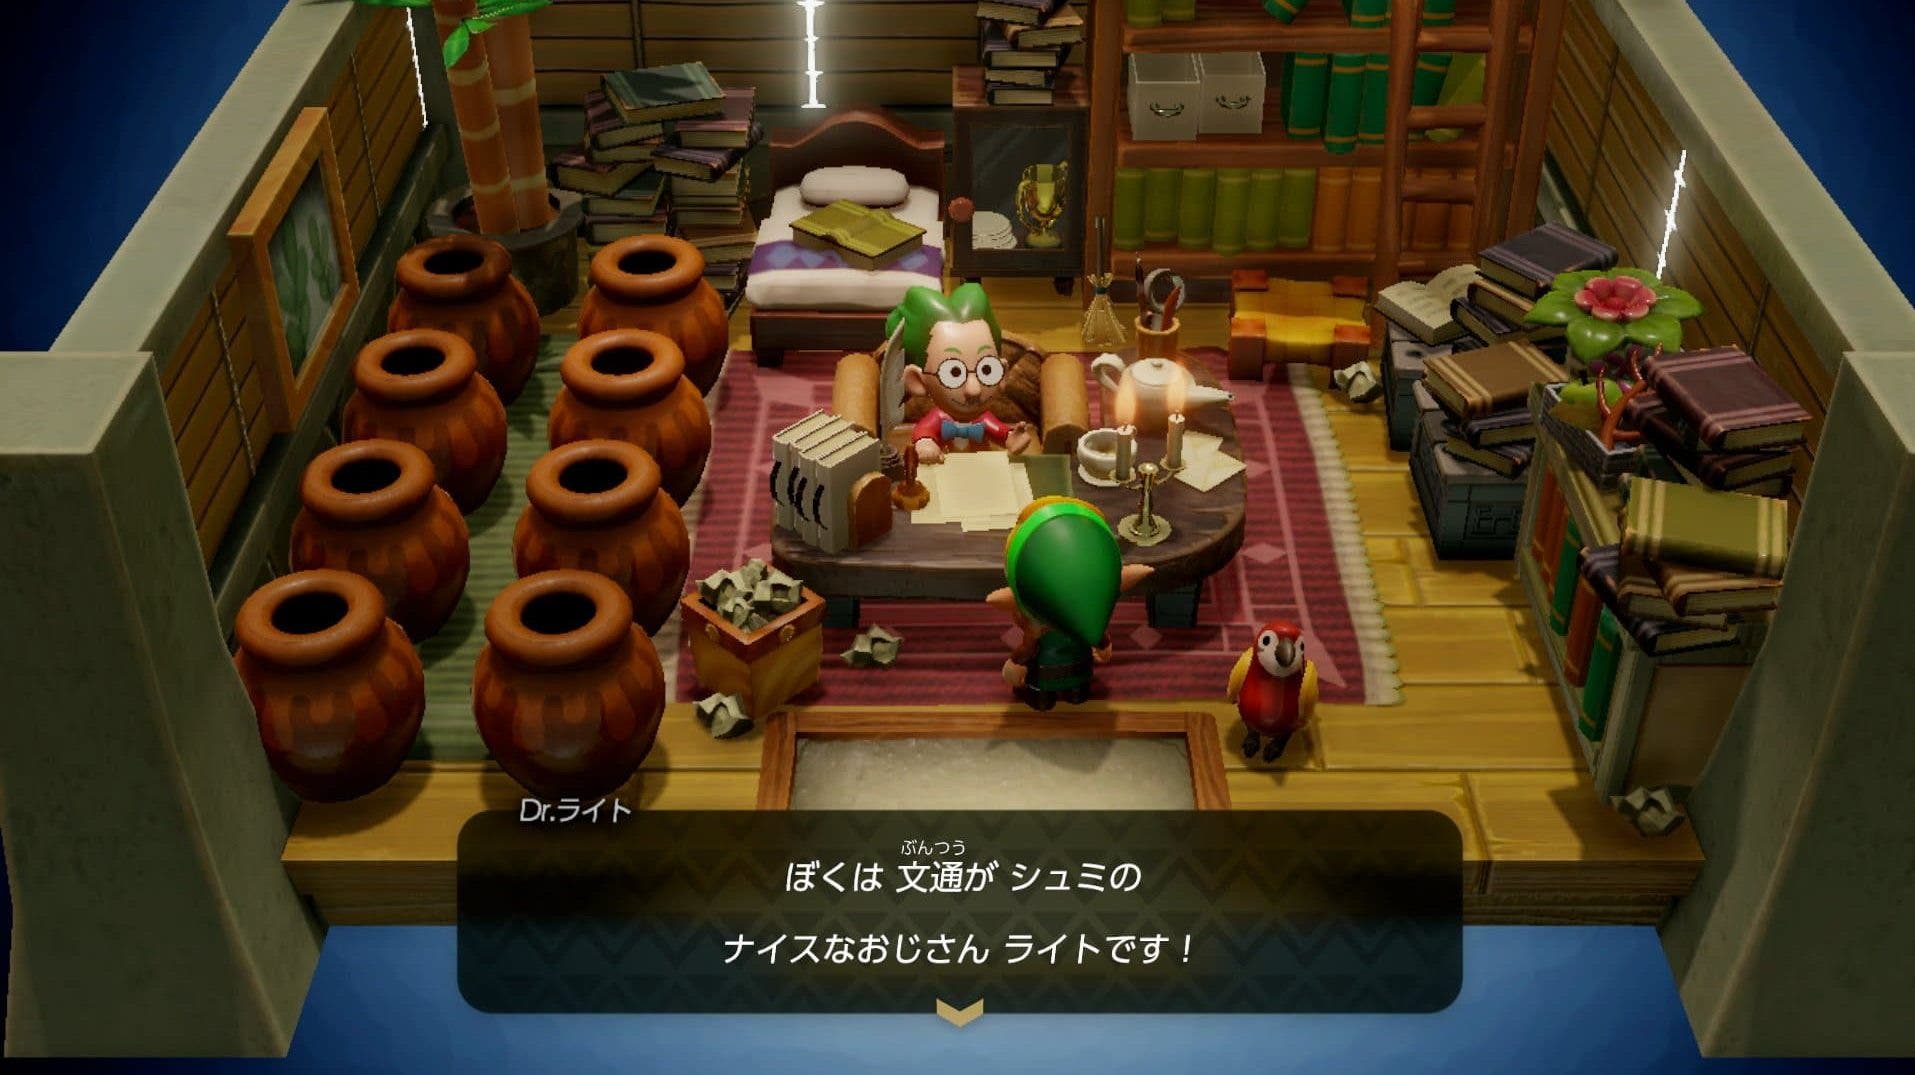 La cuenta oficial japonesa de Twitter de la saga Zelda comparte detalles sobre el Sr. Write de The Legend of Zelda: Link’s Awakening